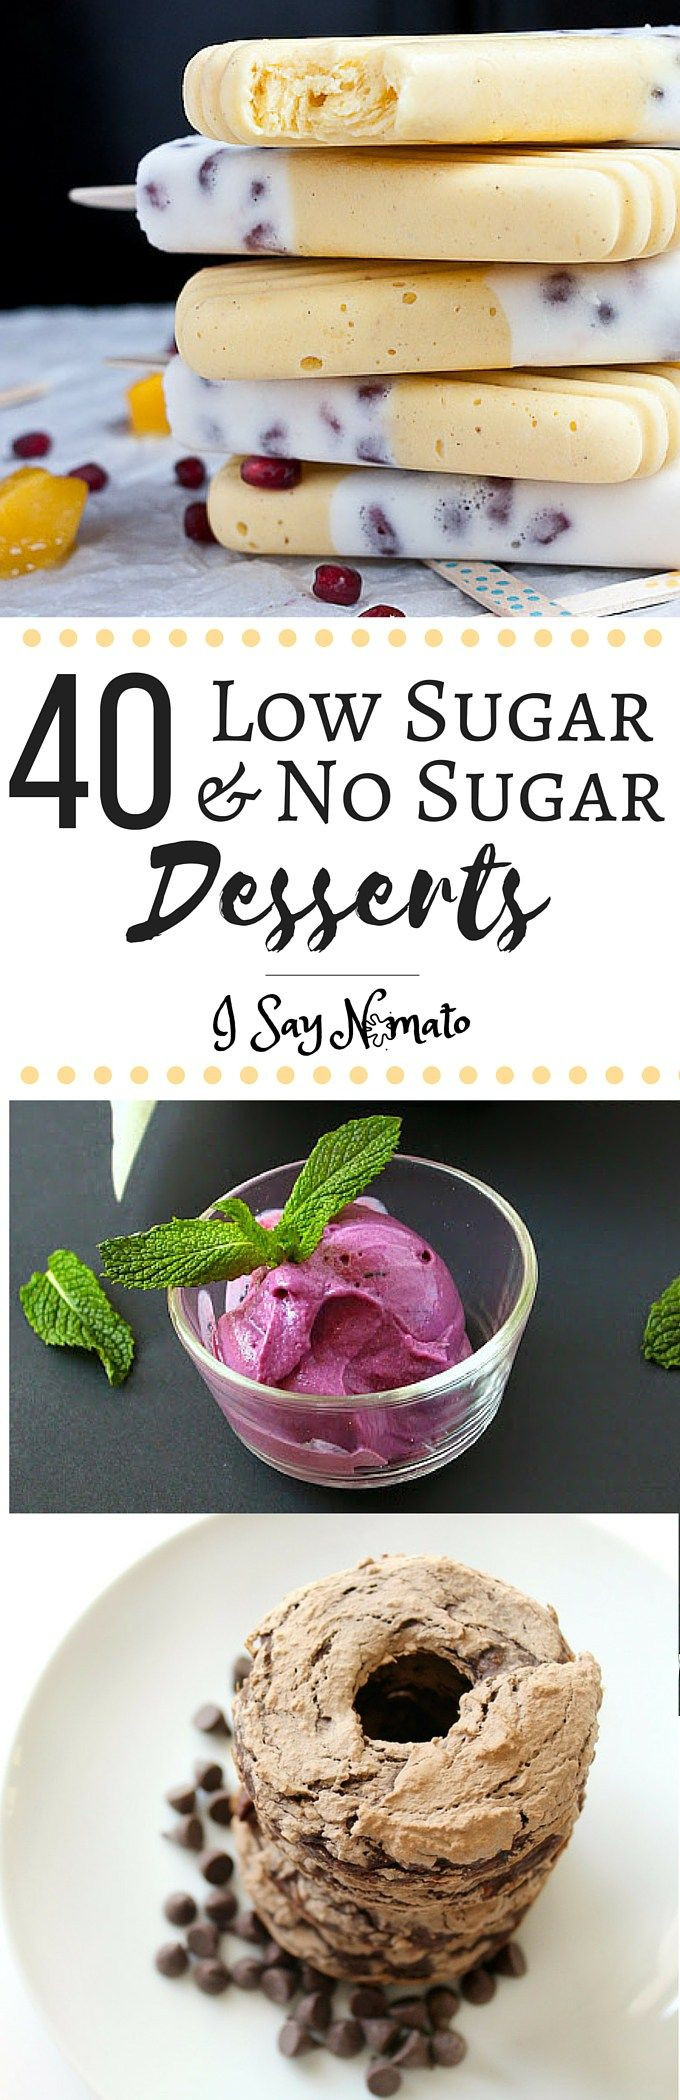 No Sugar Desserts
 20 best images about no sugar t on Pinterest